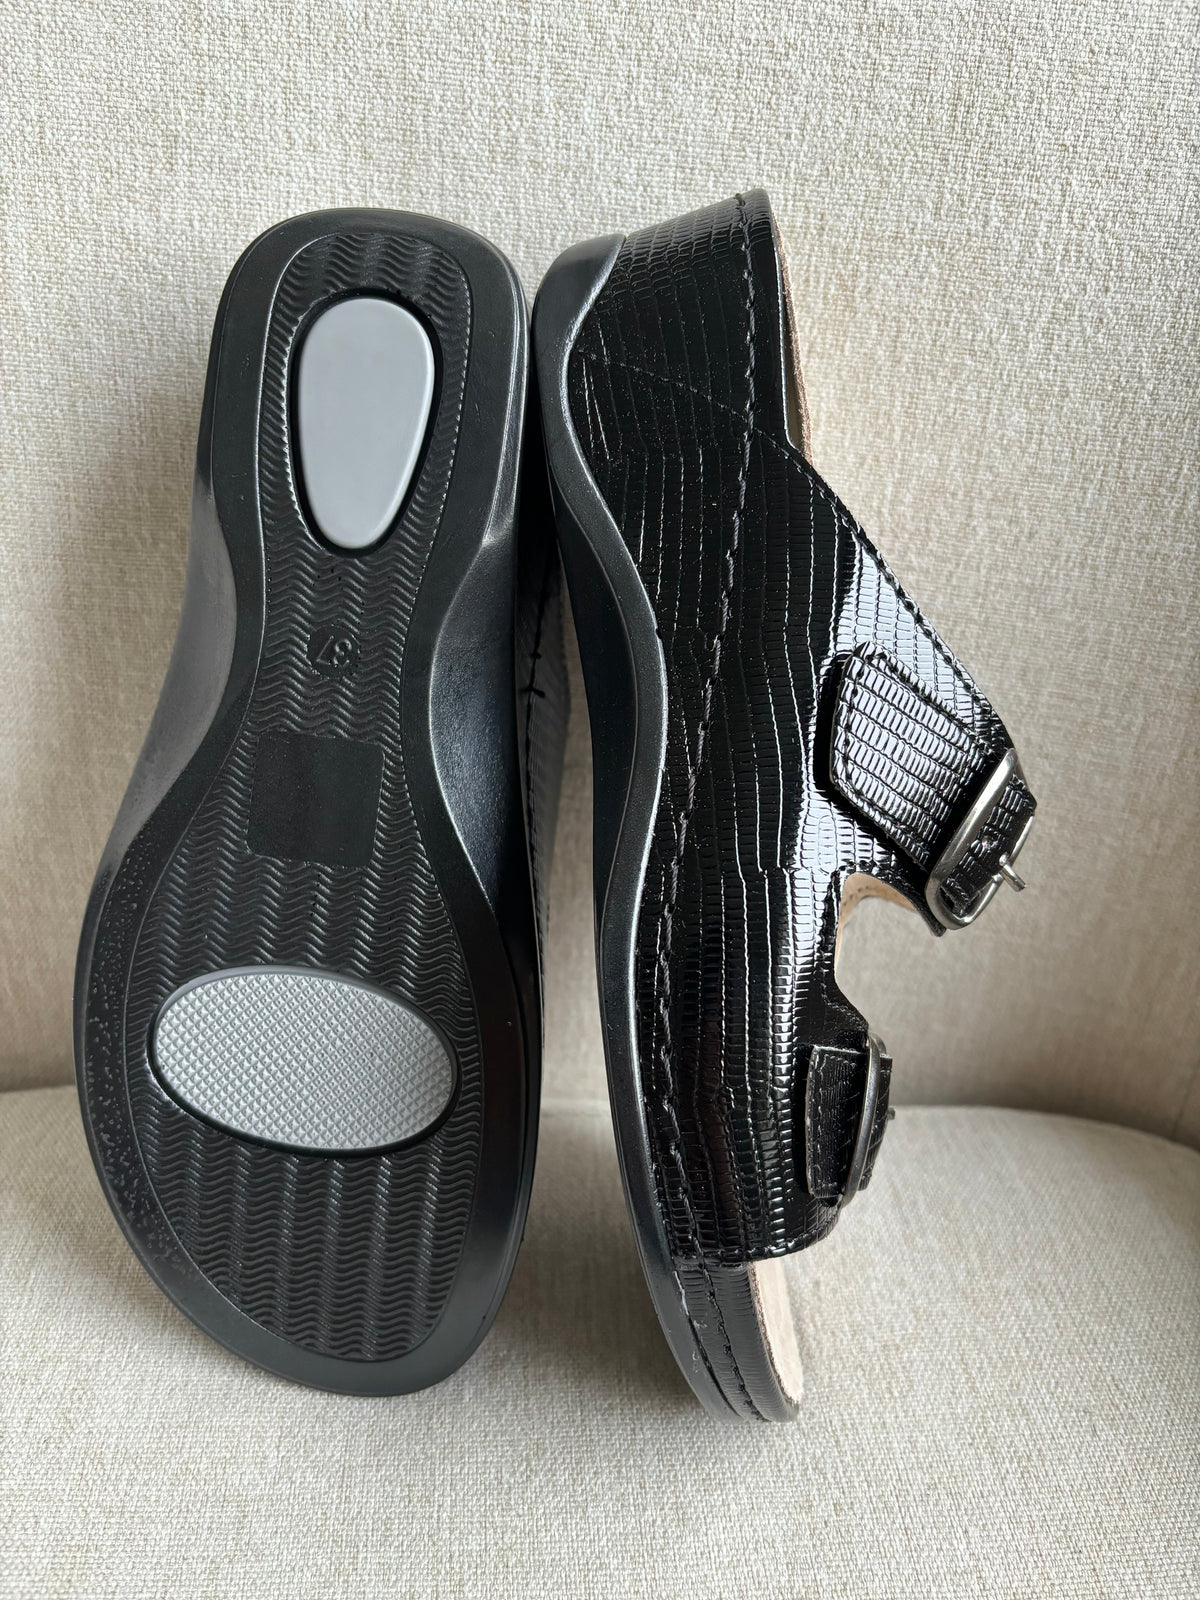 Comfort memory foam sandals by MUBB comfort - black